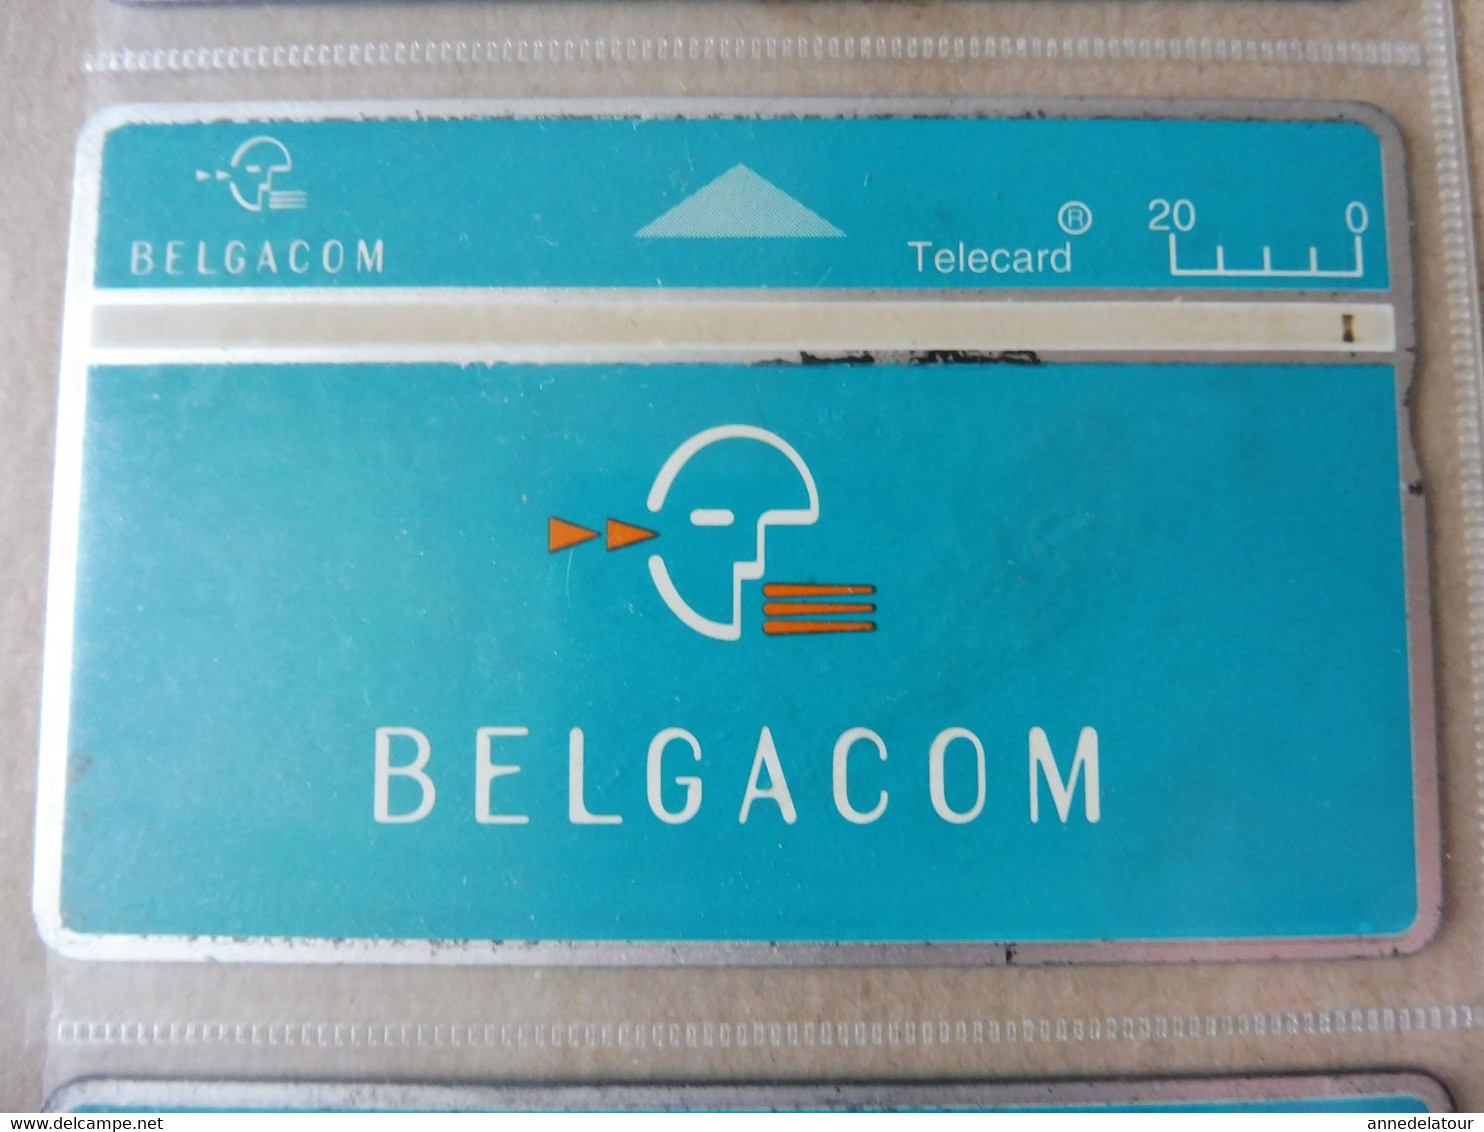 10 télécartes (cartes téléphoniques)  Telecard  BELGACOM ,  origine Belgique